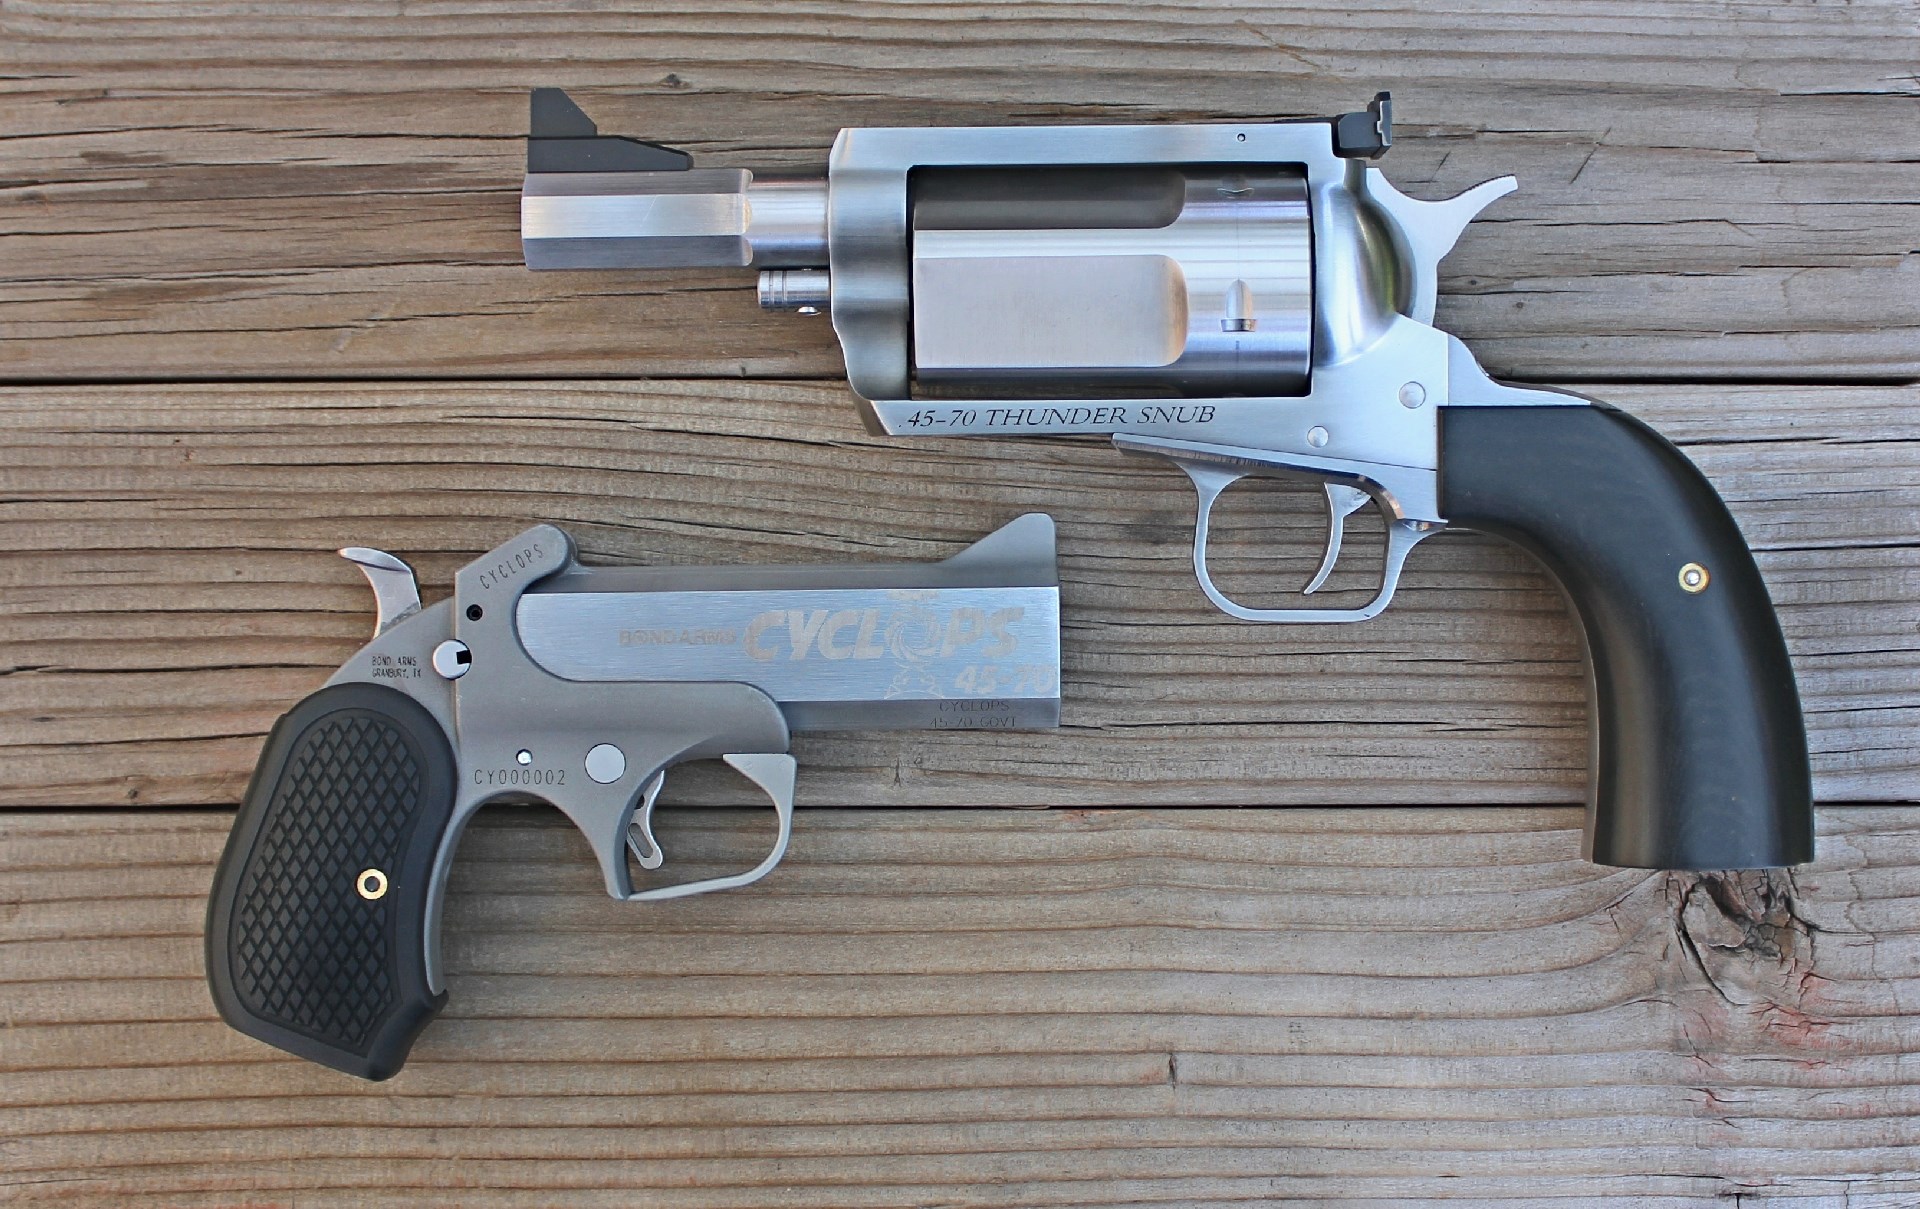 The 54.7-oz. 3” barrel, 5-shot BFR ‘Thunder Snub’ revolver (Top right) compared to the 28-oz. single-shot Cyclops.